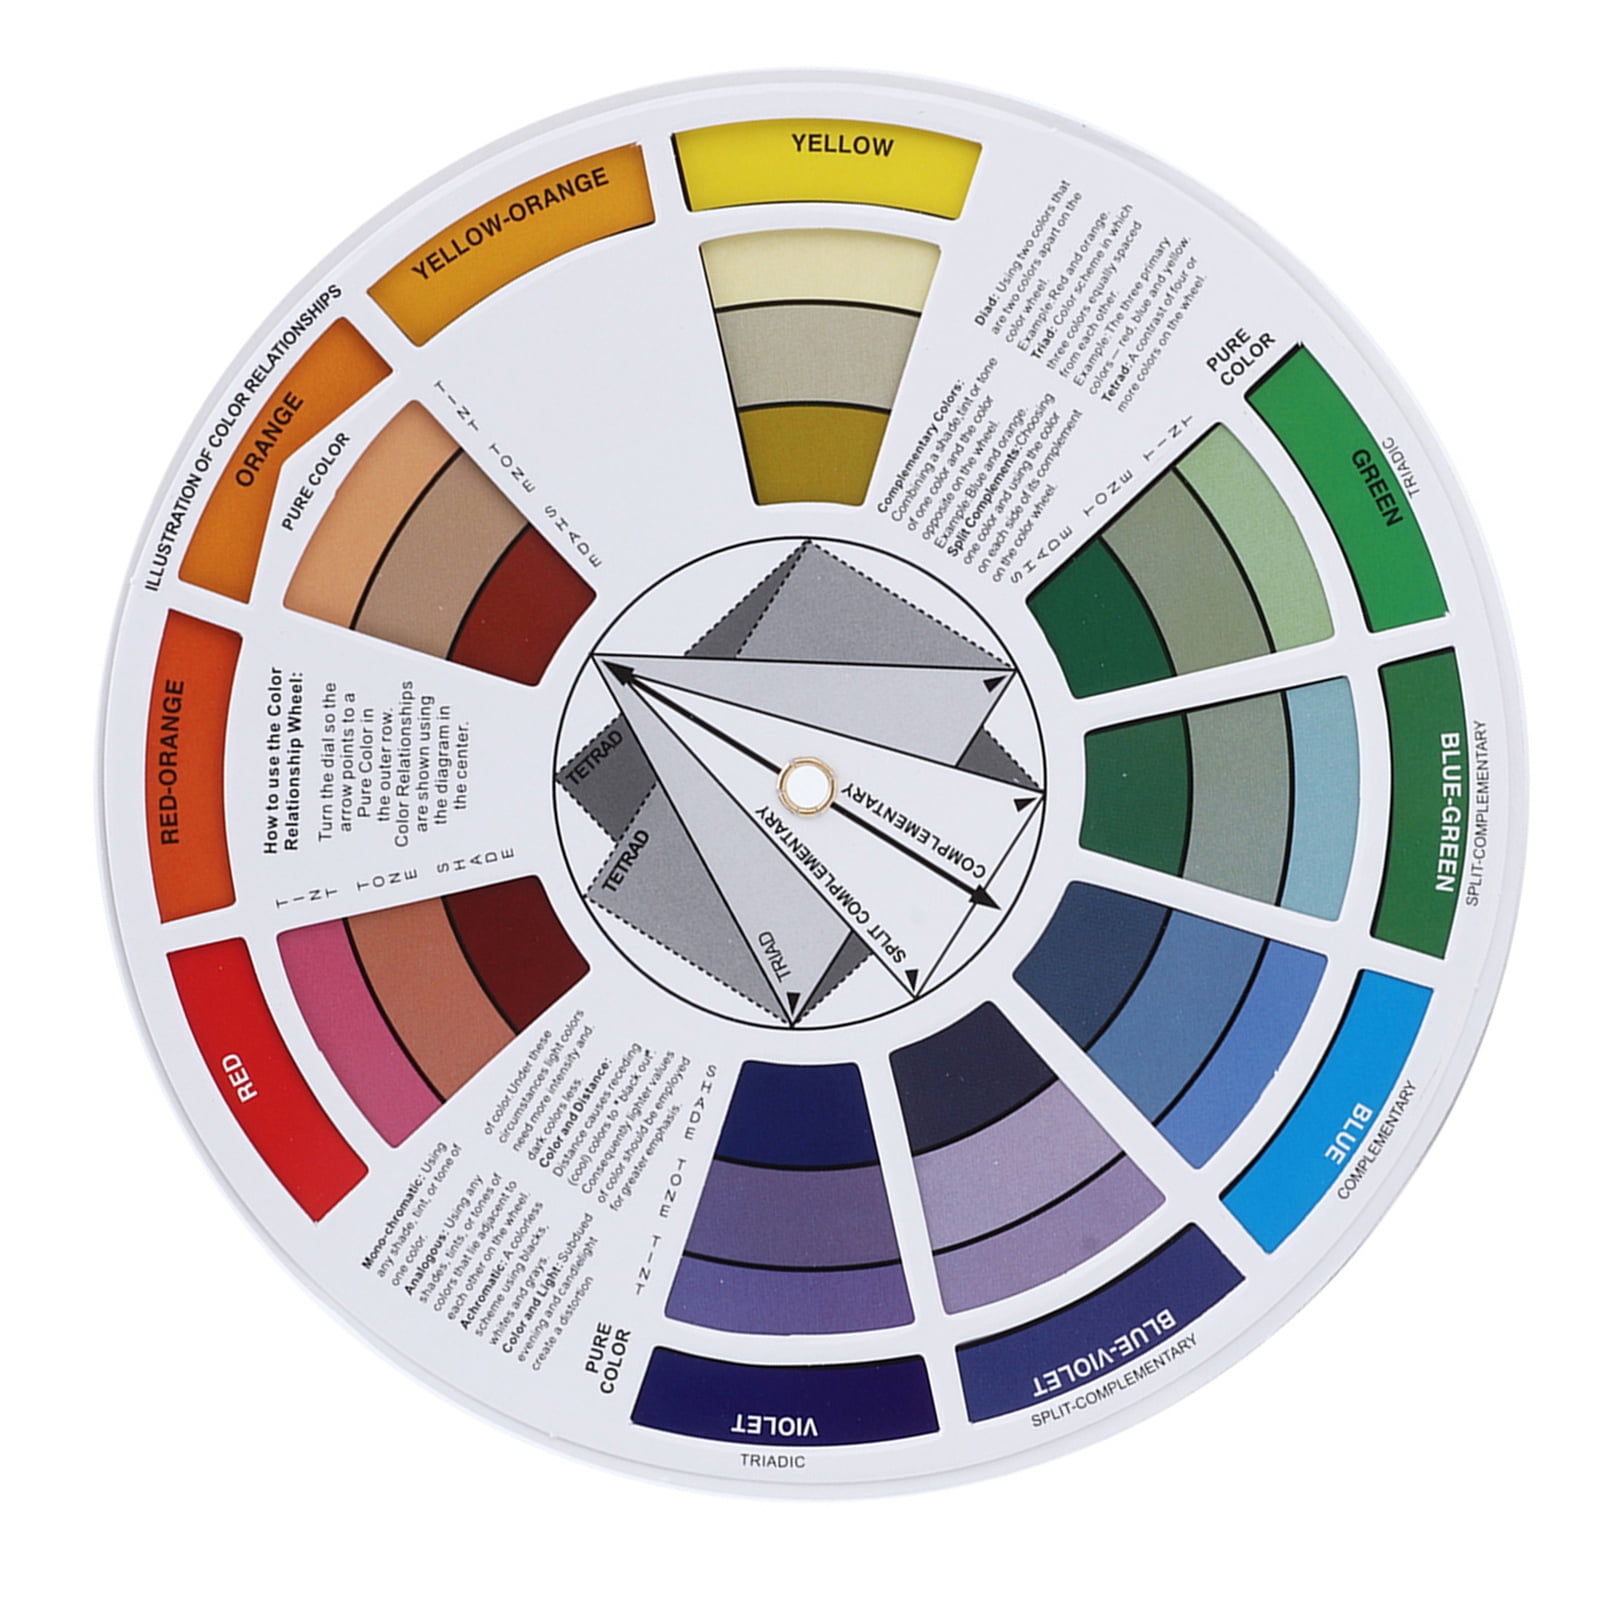 FAGINEY Sonew Color Wheel, Ink Color Wheel Chart Pigment Mix Color ...